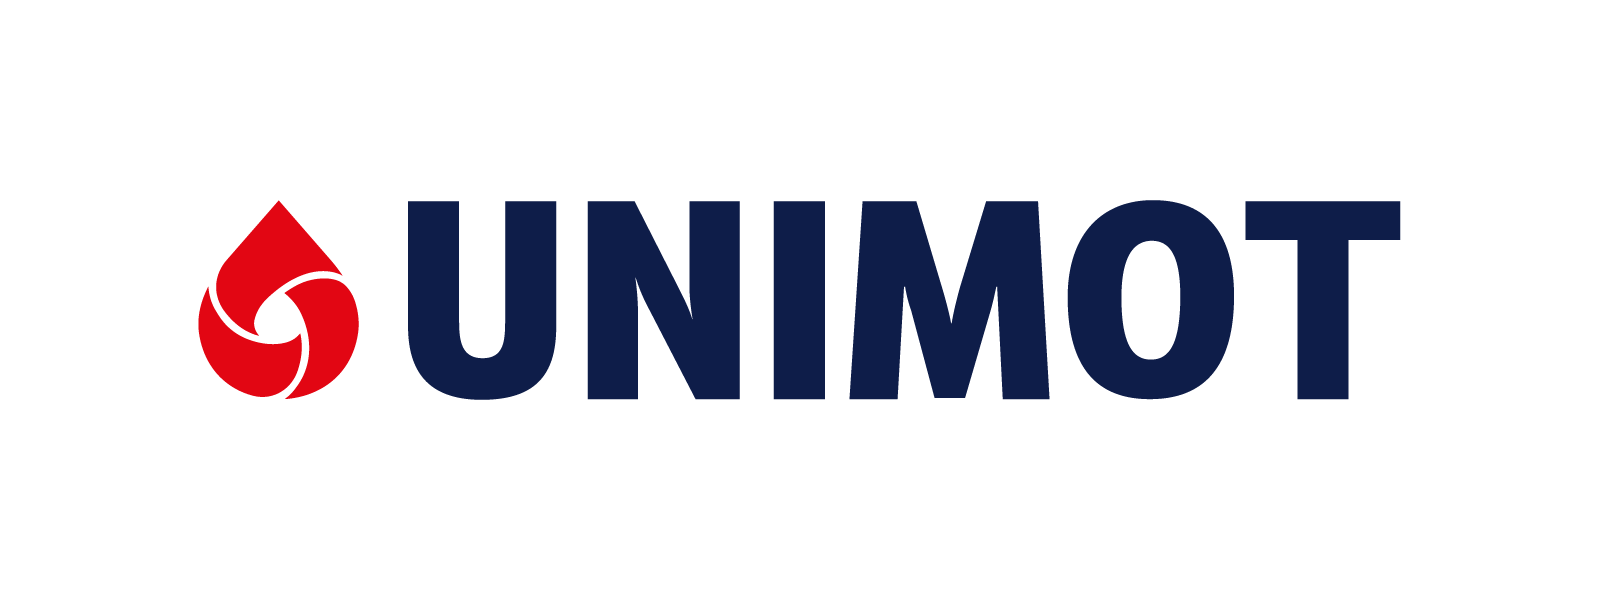 UNIMOT logotyo 2018 02